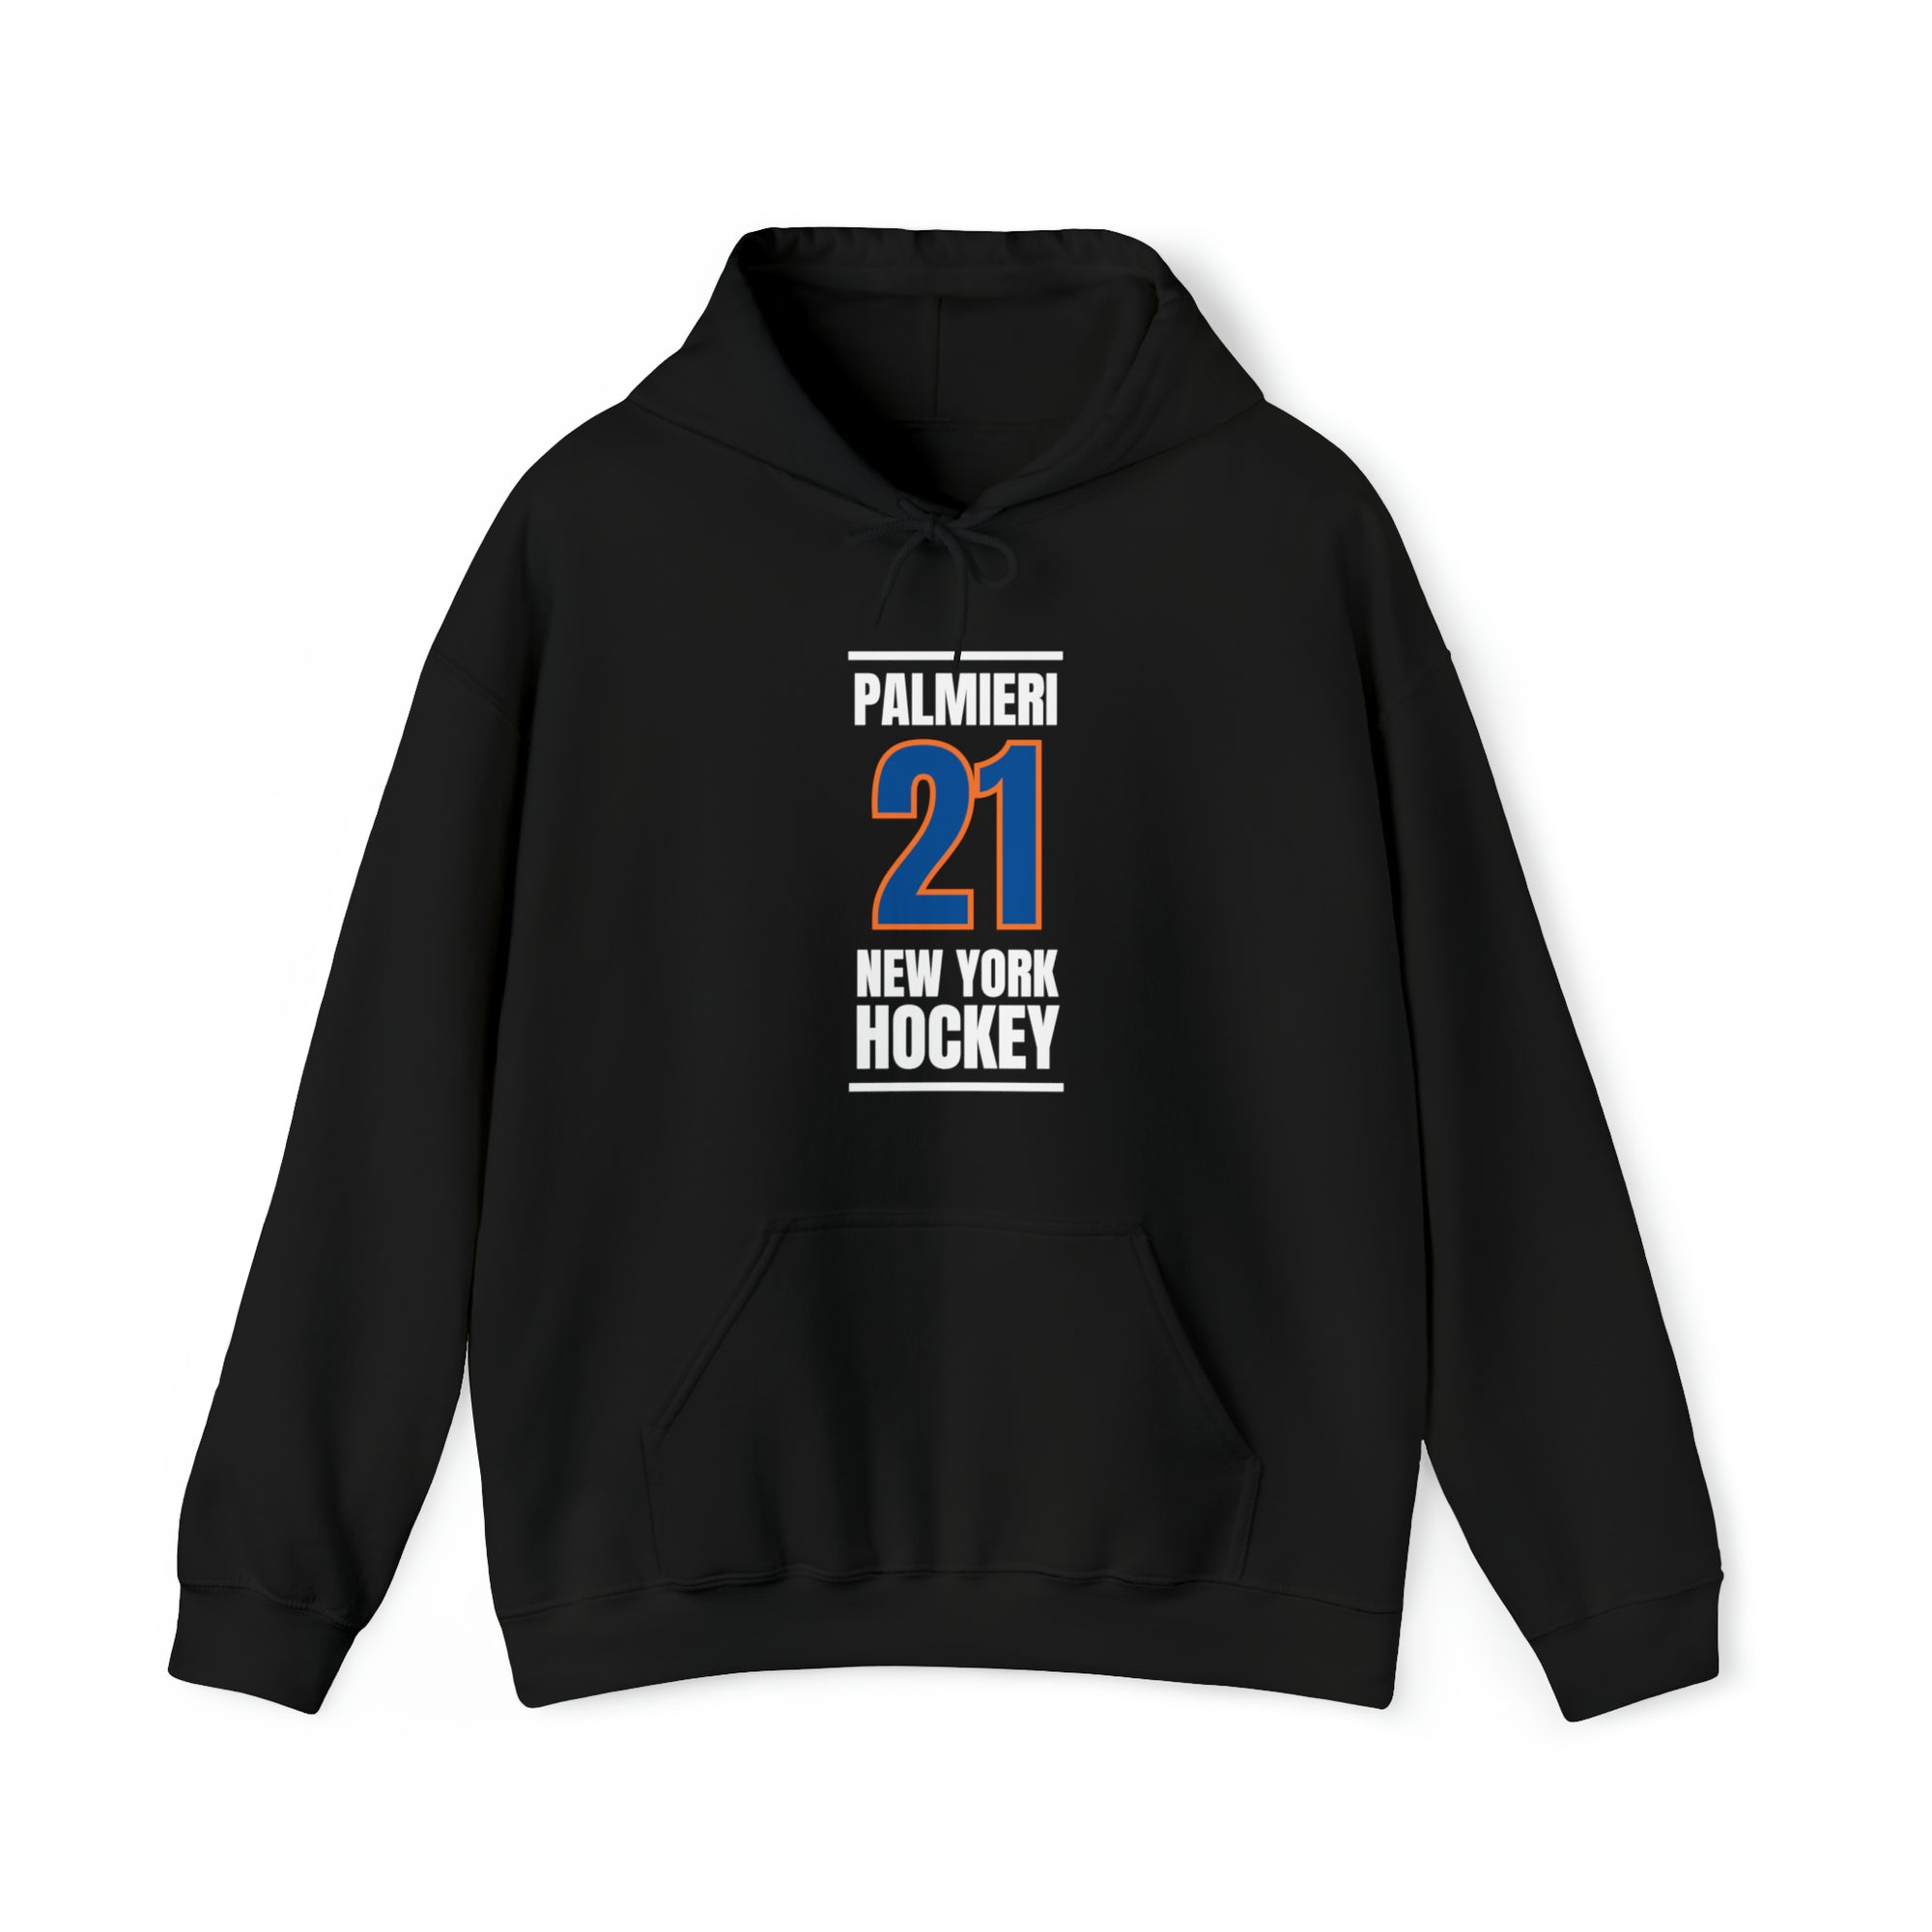 Palmieri 21 New York Hockey Blue Vertical Design Unisex Hooded Sweatshirt